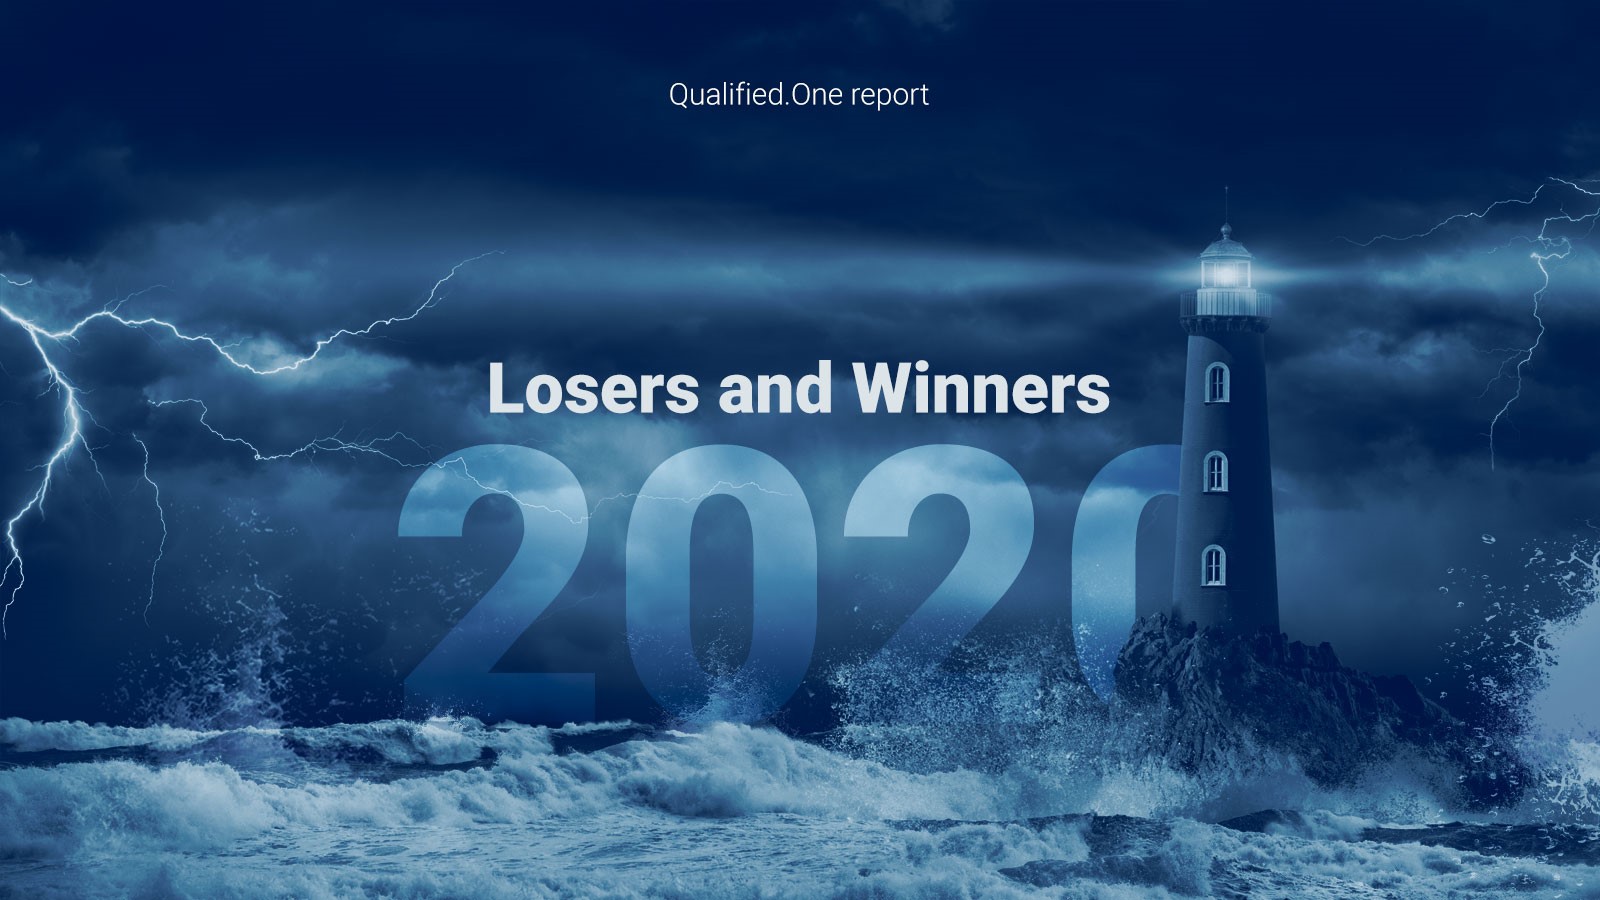 Qualified One 2020 Summary